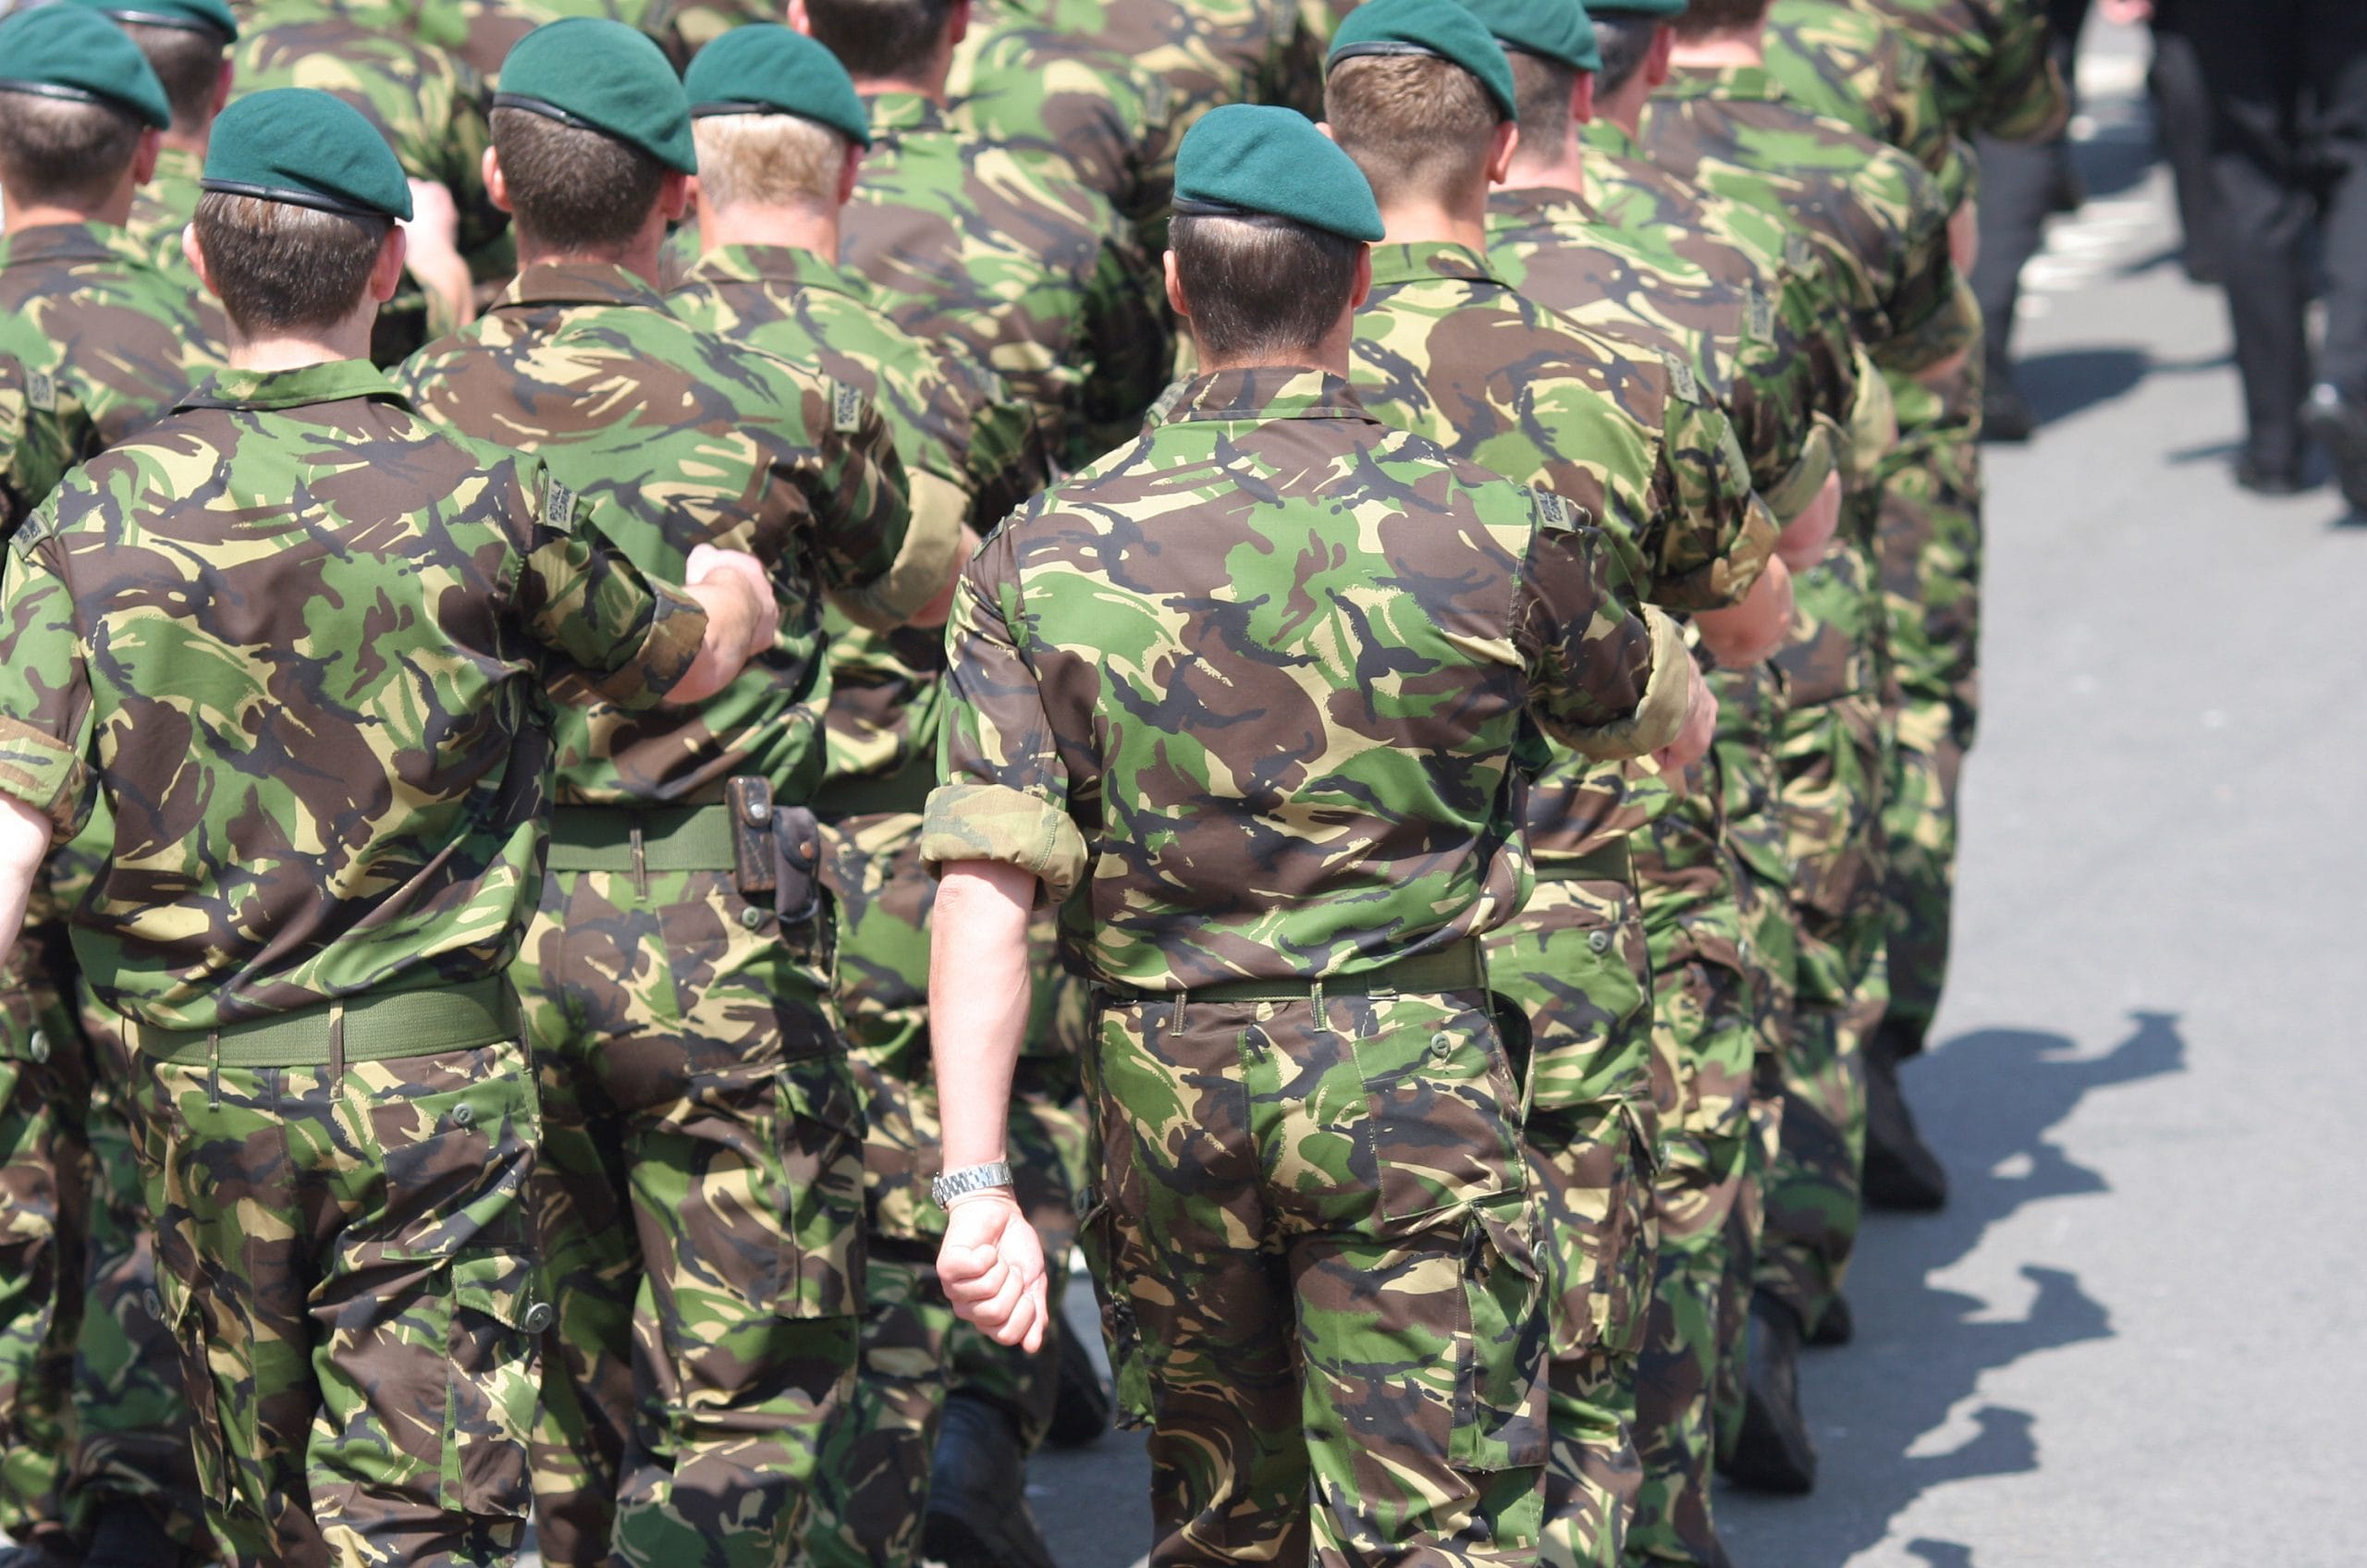 Veterans: Army men marching in uniform lines